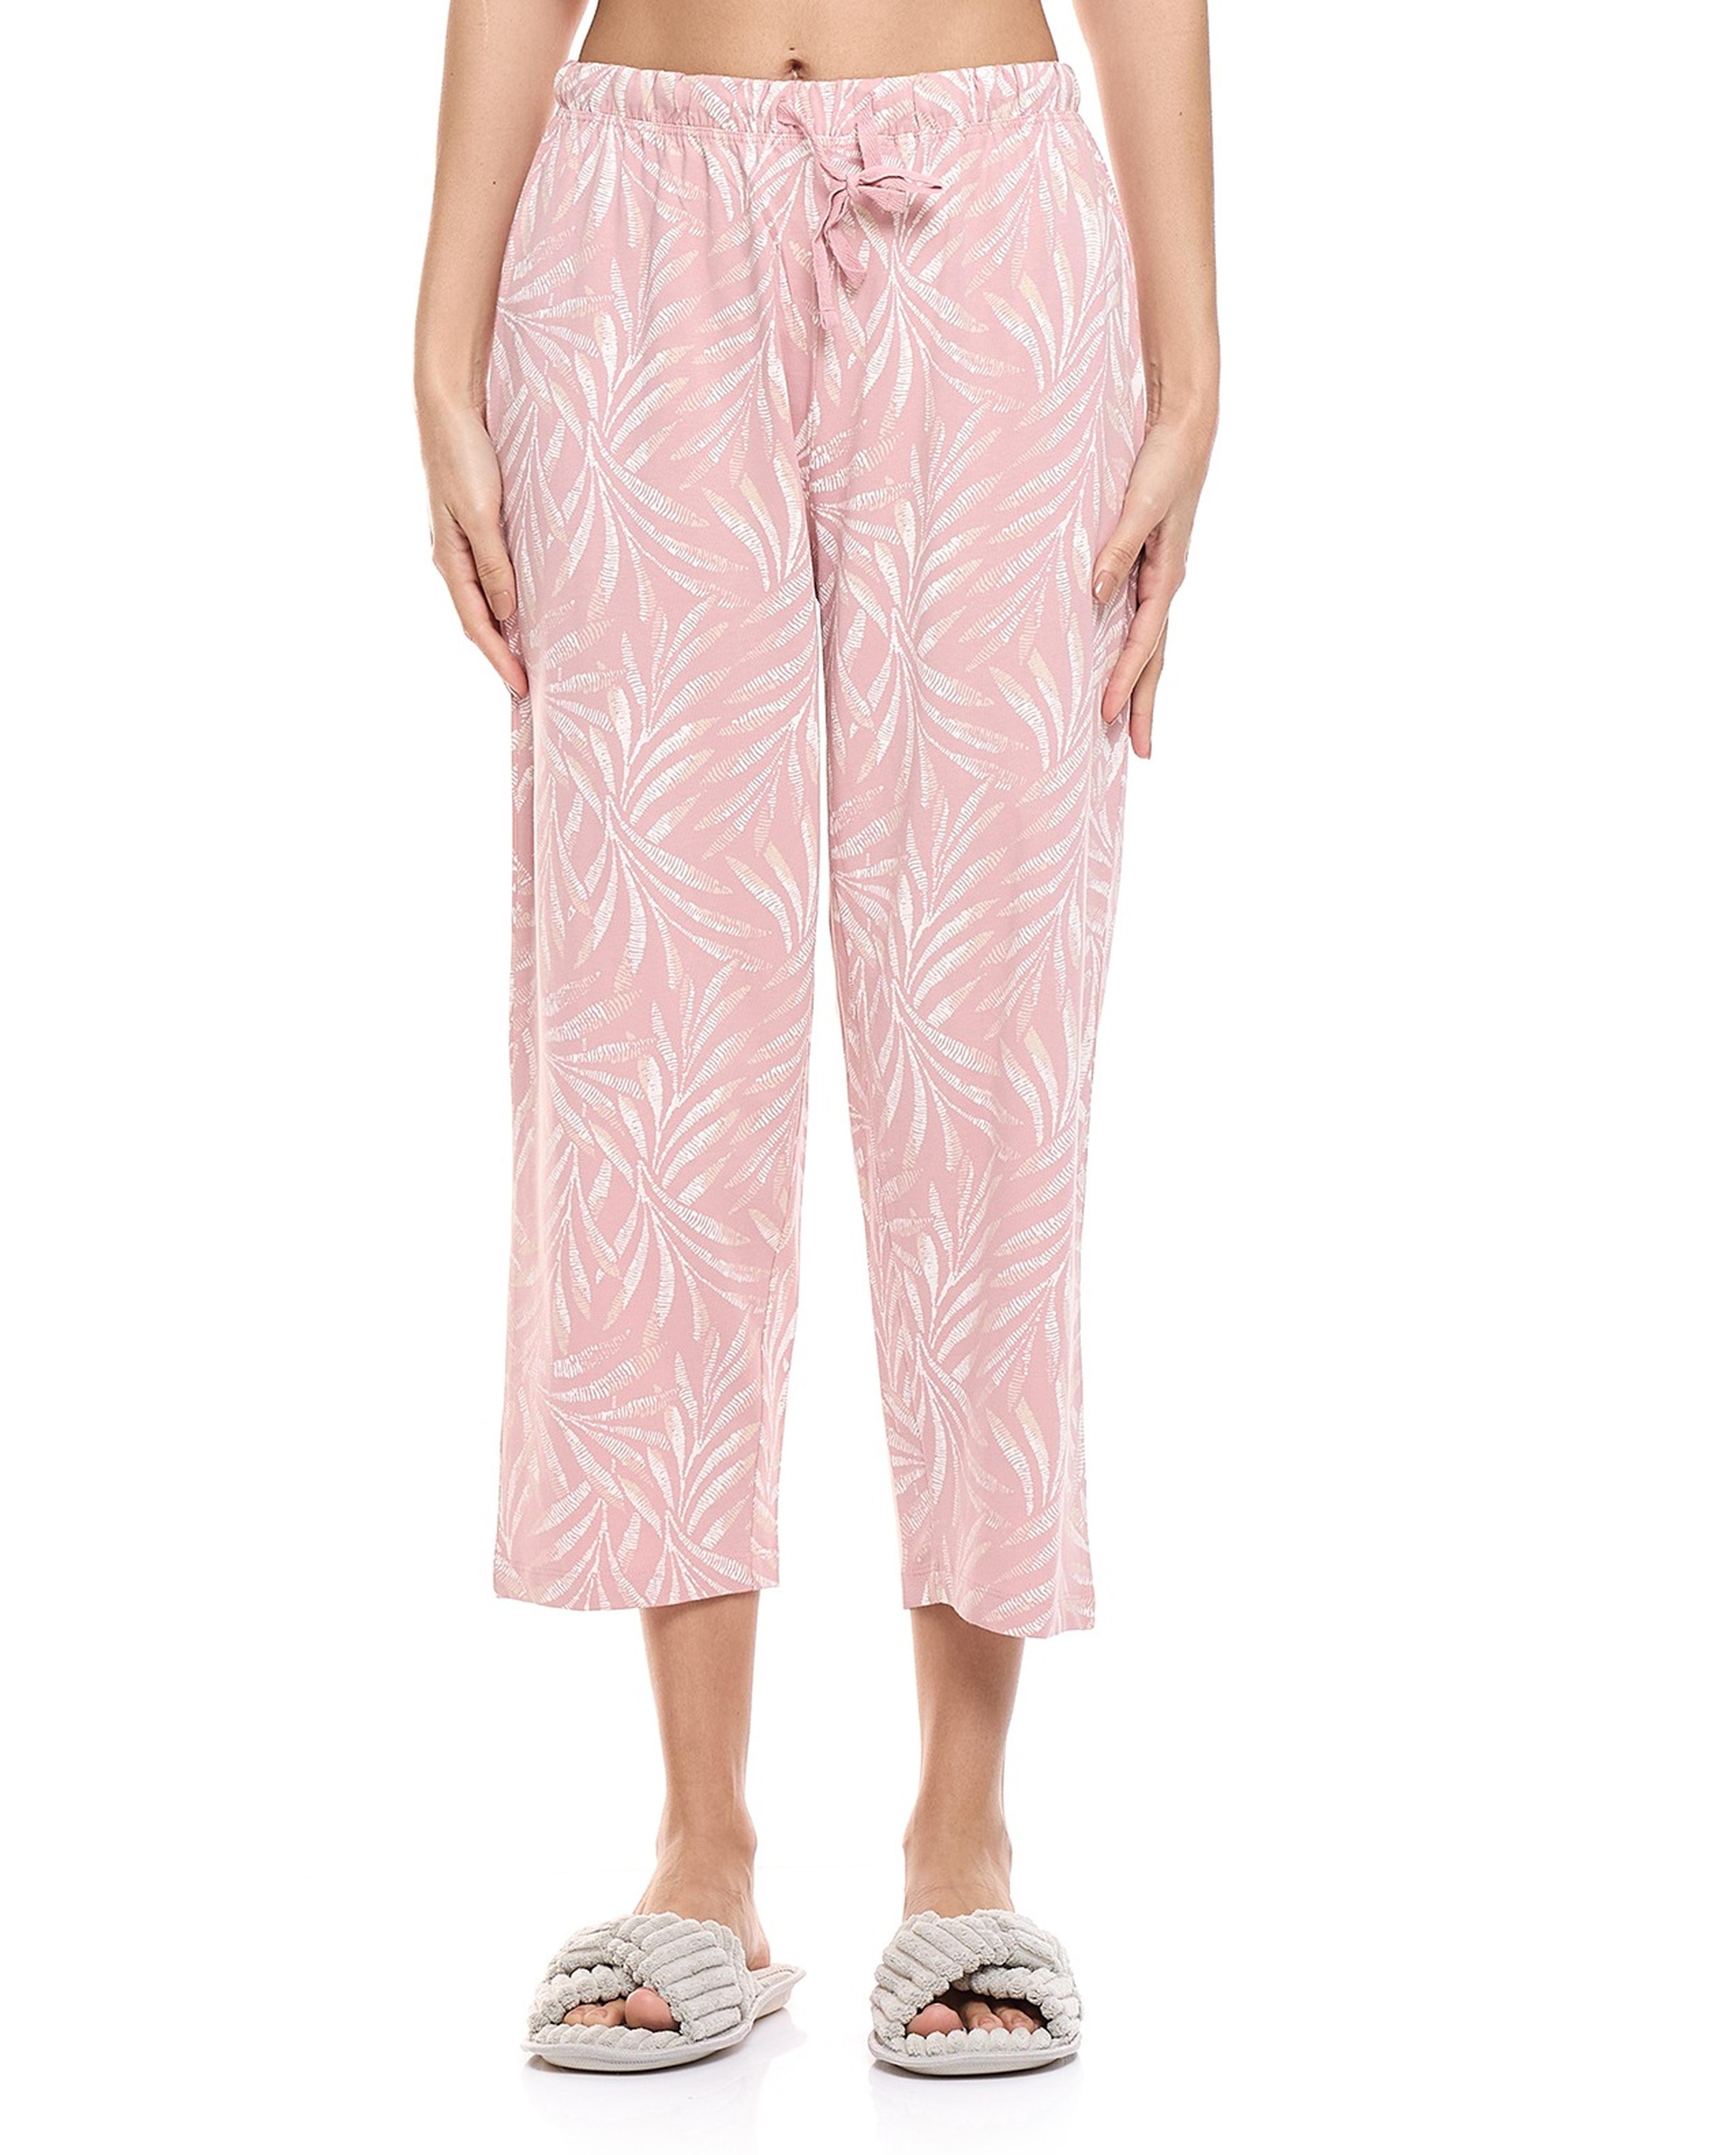 Printed Short Sleeves Pajama Set